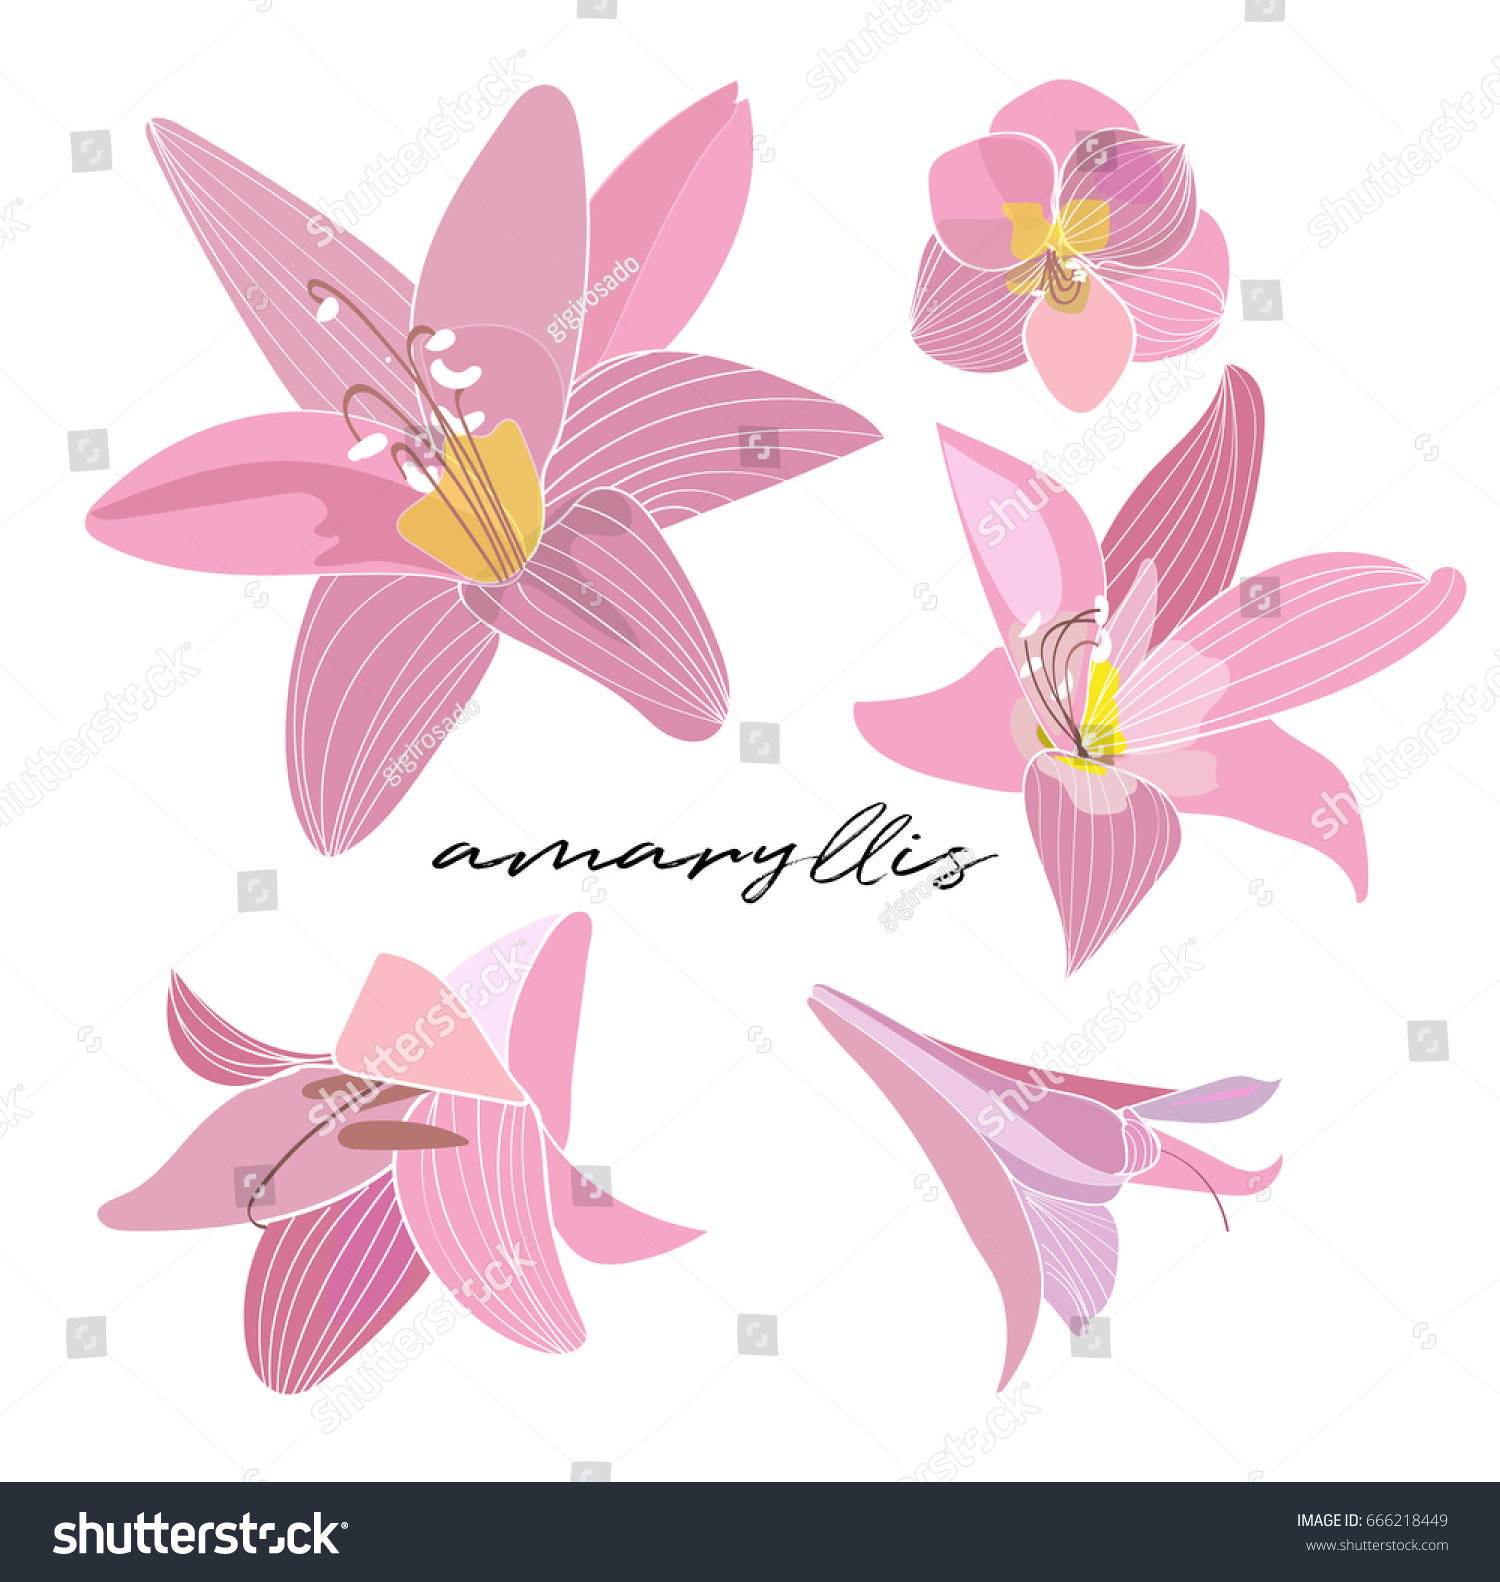 Amaryllis Vector Elements Pink Flower Illustration Stock Vector HD ...